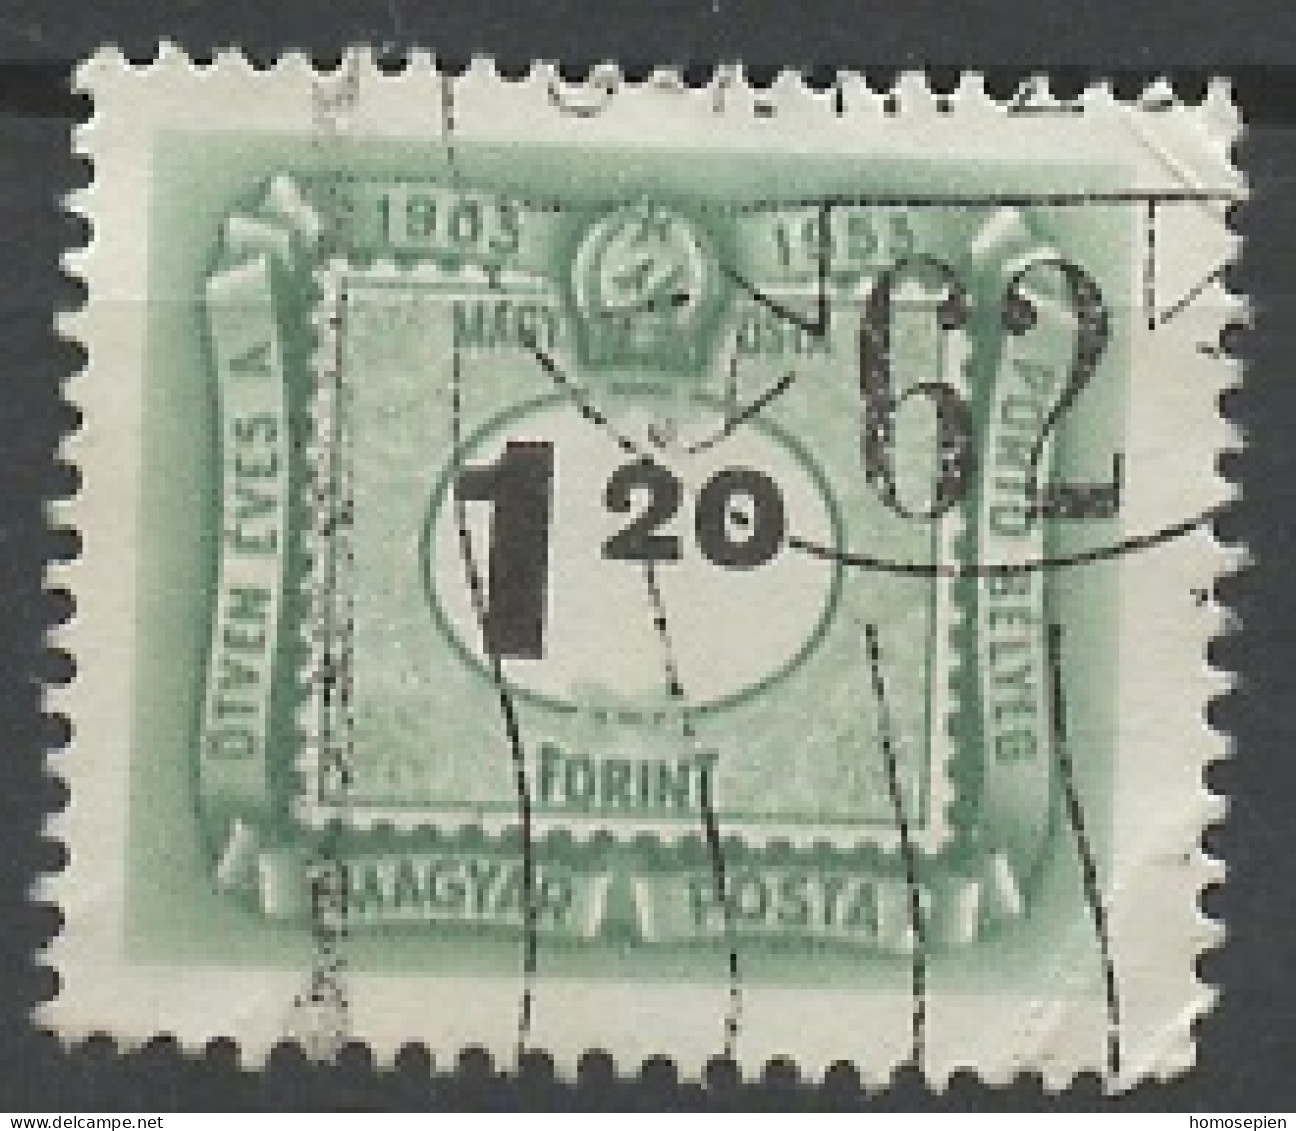 Hongrie - Hungary - Ungarn Taxe 1953 Y&T N°T213 - Michel N°P213 (o) - 1,20fo Cinquantenaire Du Timbre Taxe - Port Dû (Taxe)